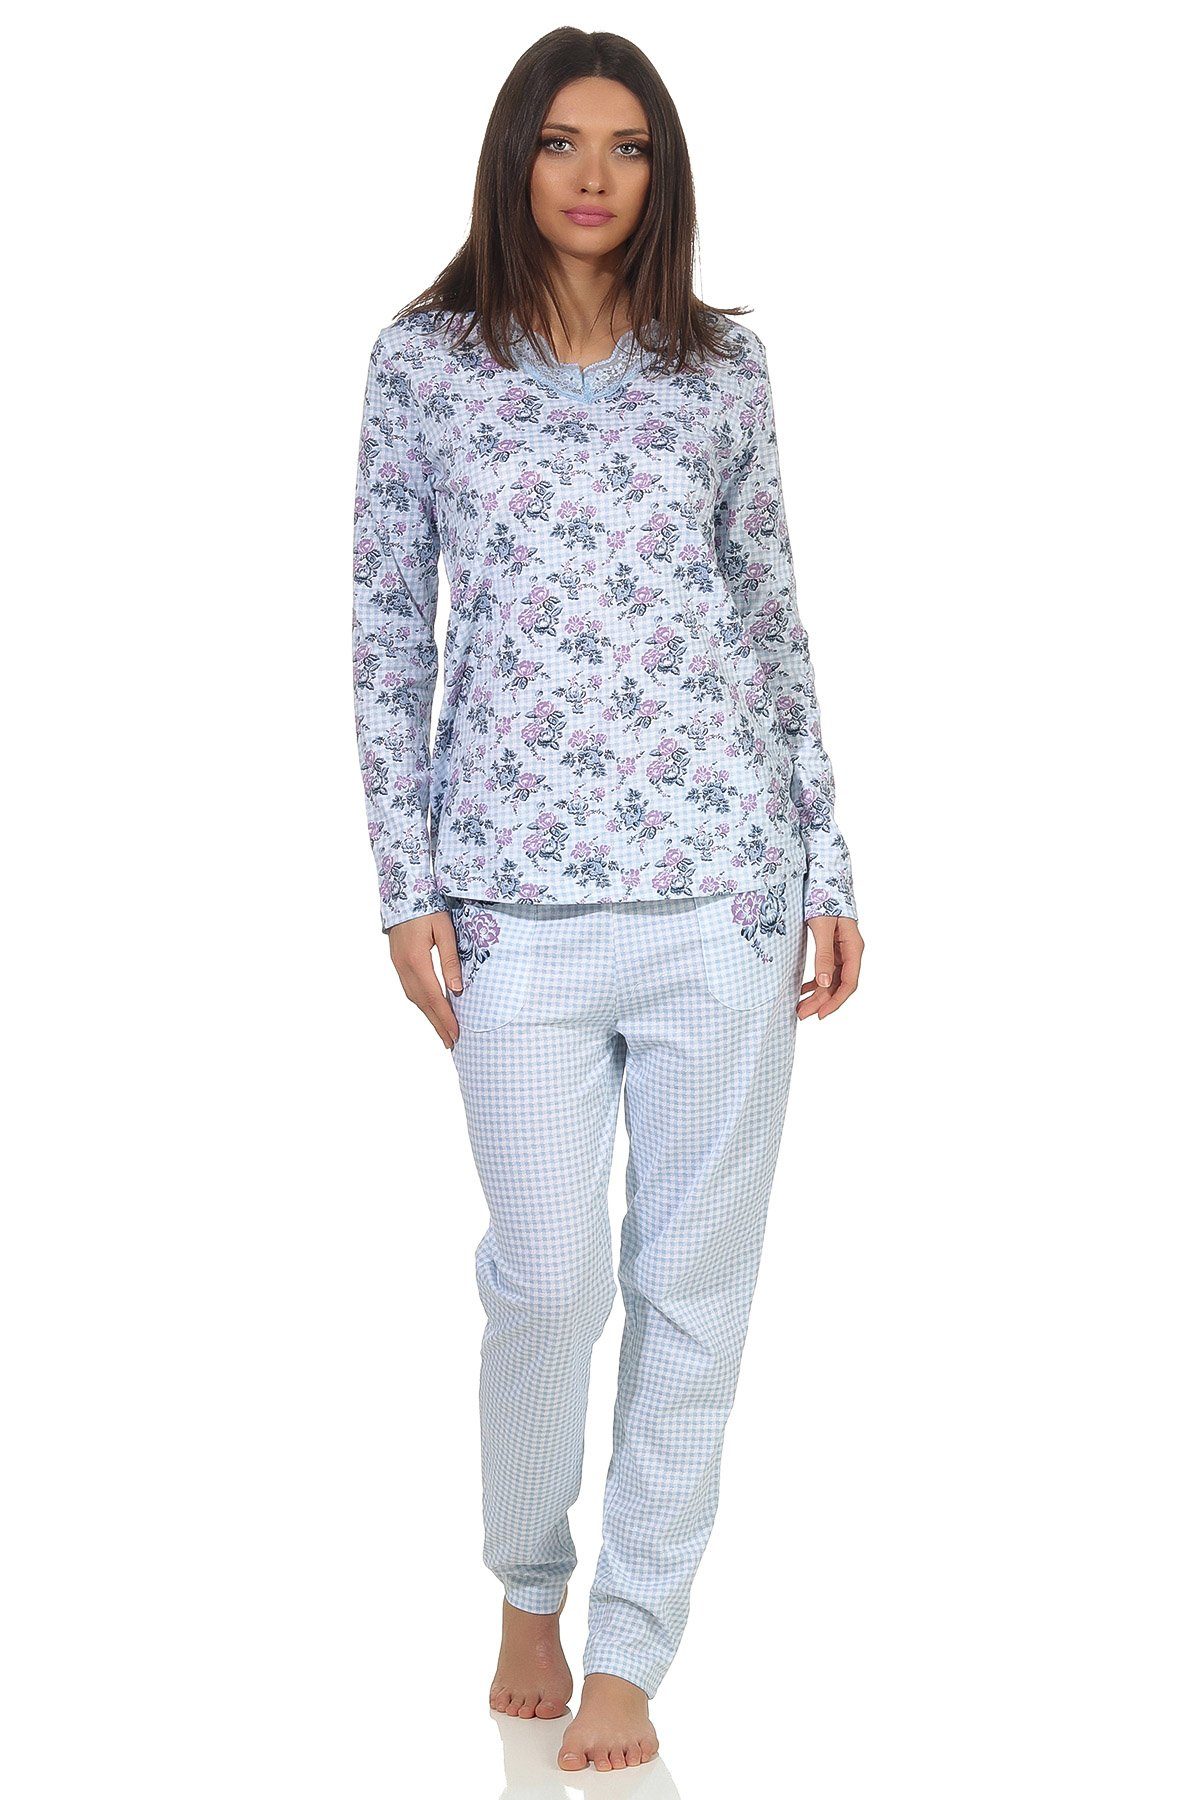 Normann Pyjama Klassischer Damen Schlafanzug langarm im florales Muster - 102 106 hellblau